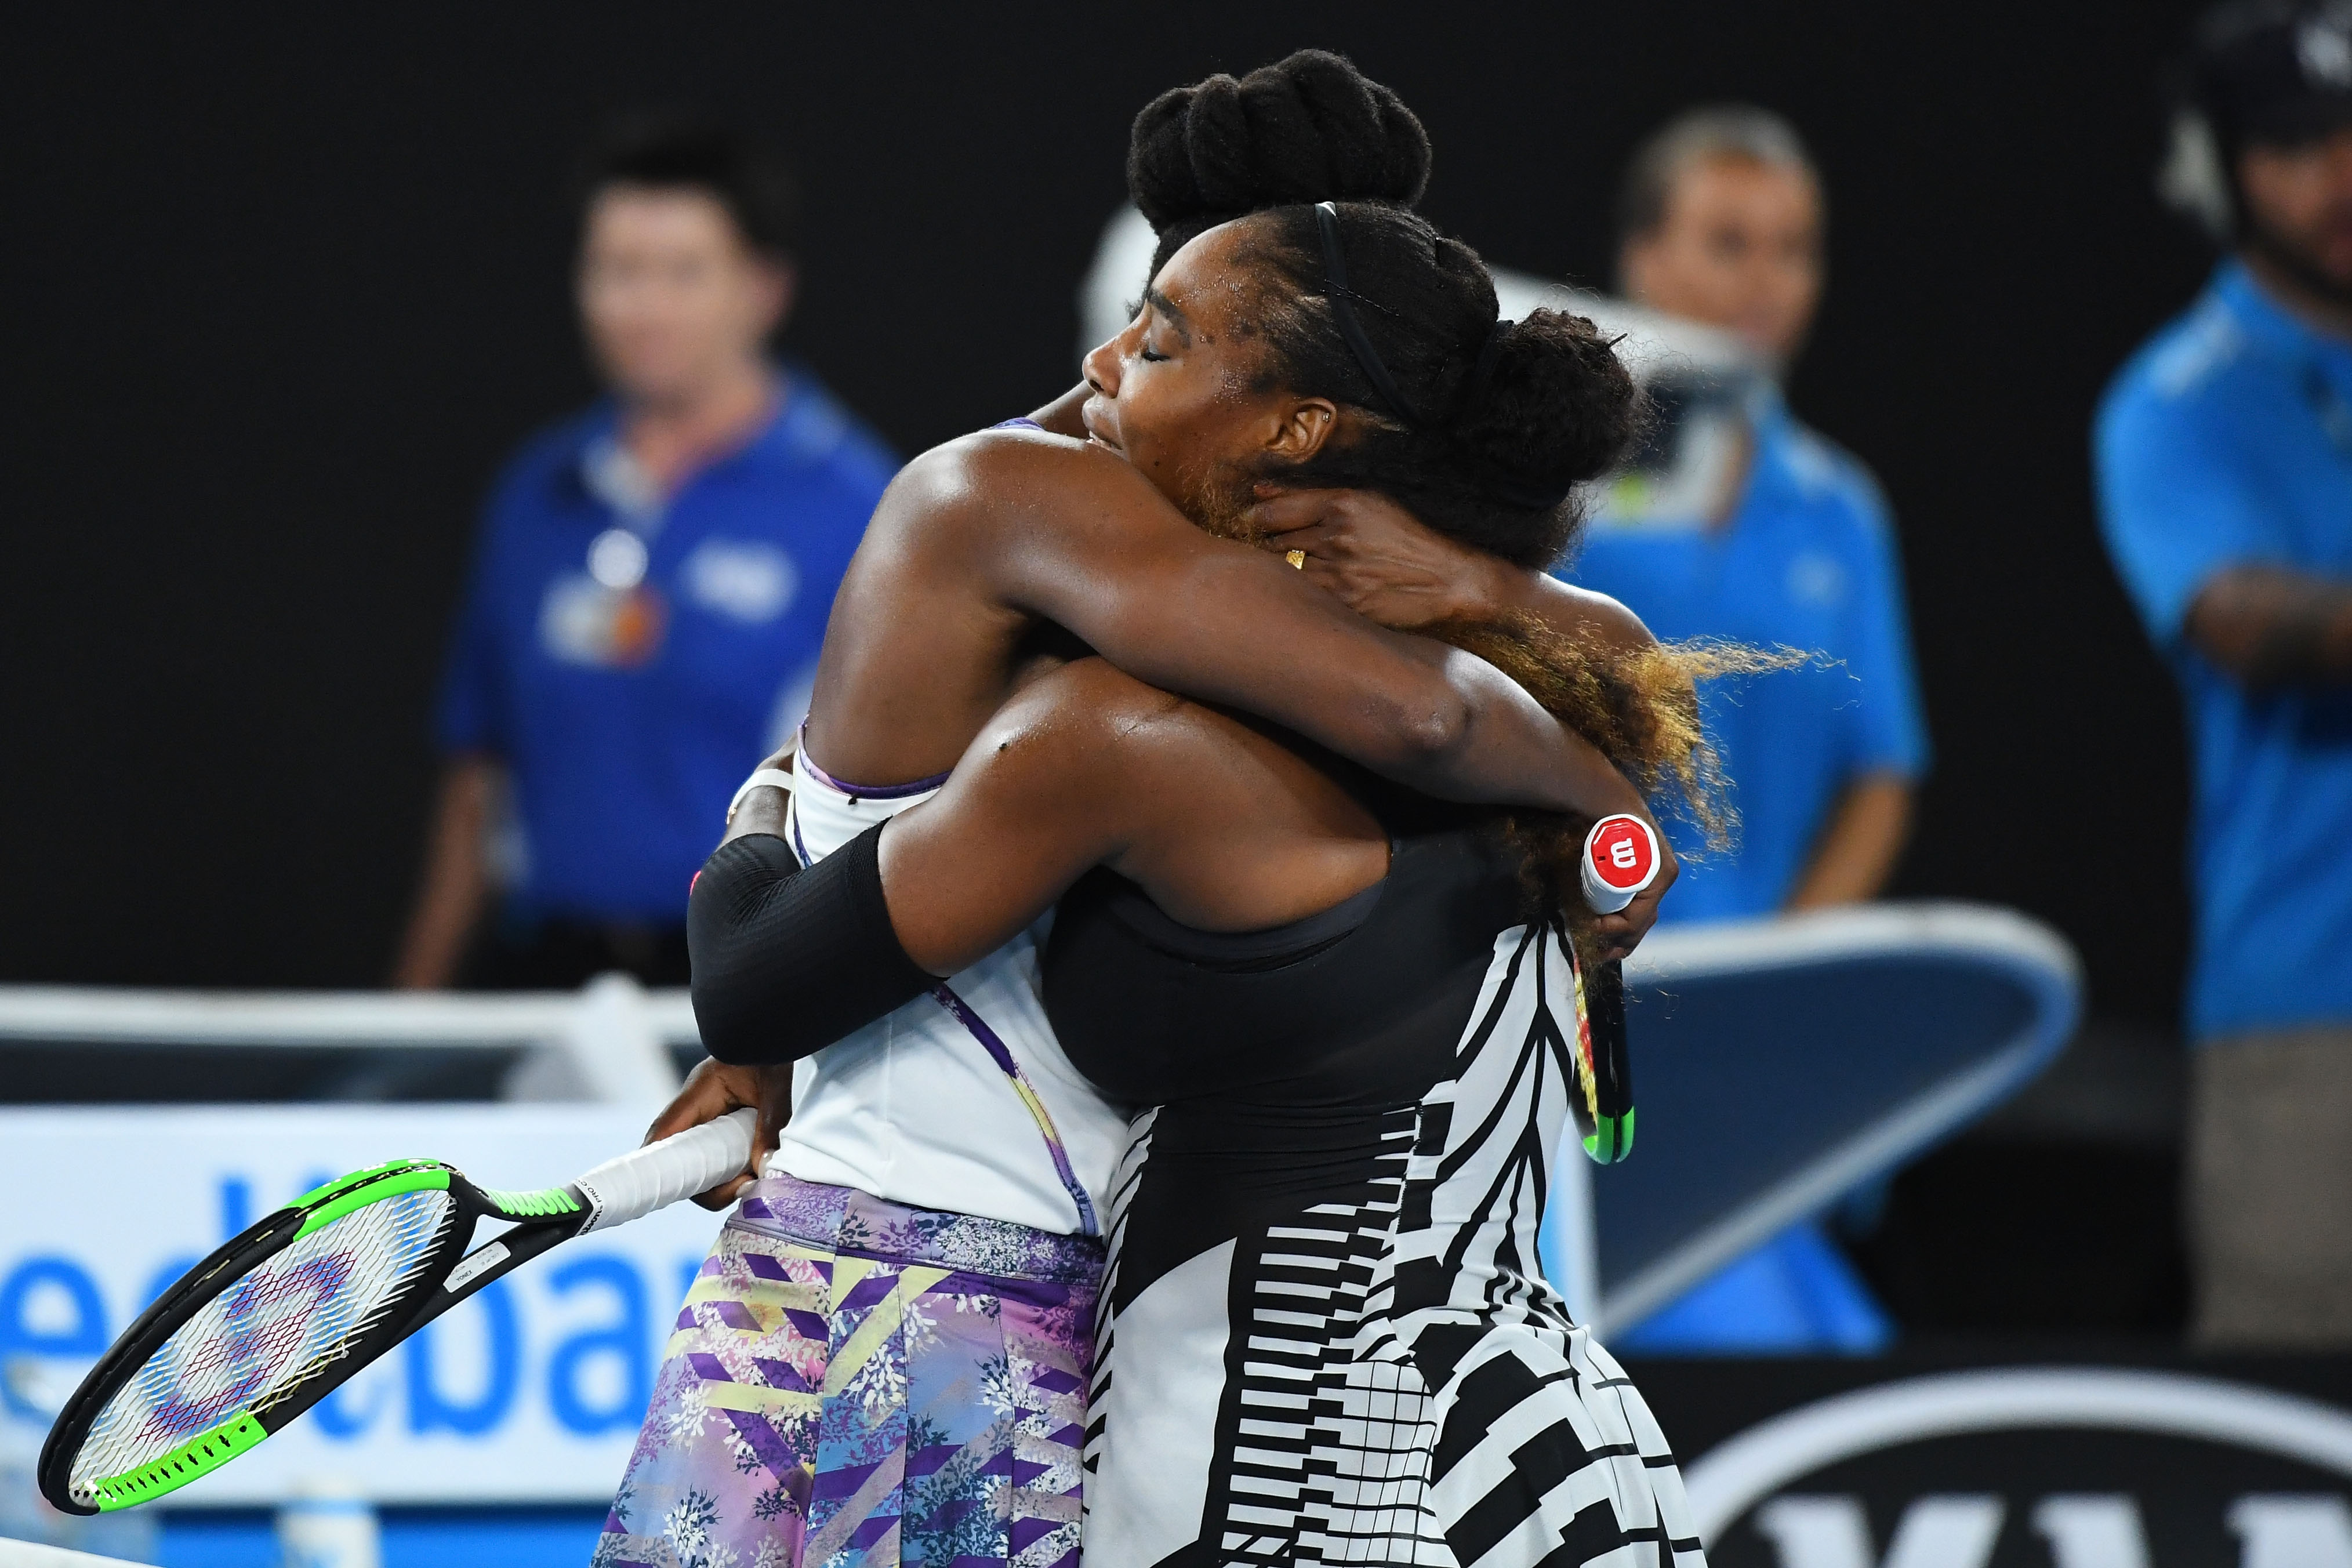 Venus Williams, Serena Williams, Mubadala World Tennis Championship, Tennis news, Sports news